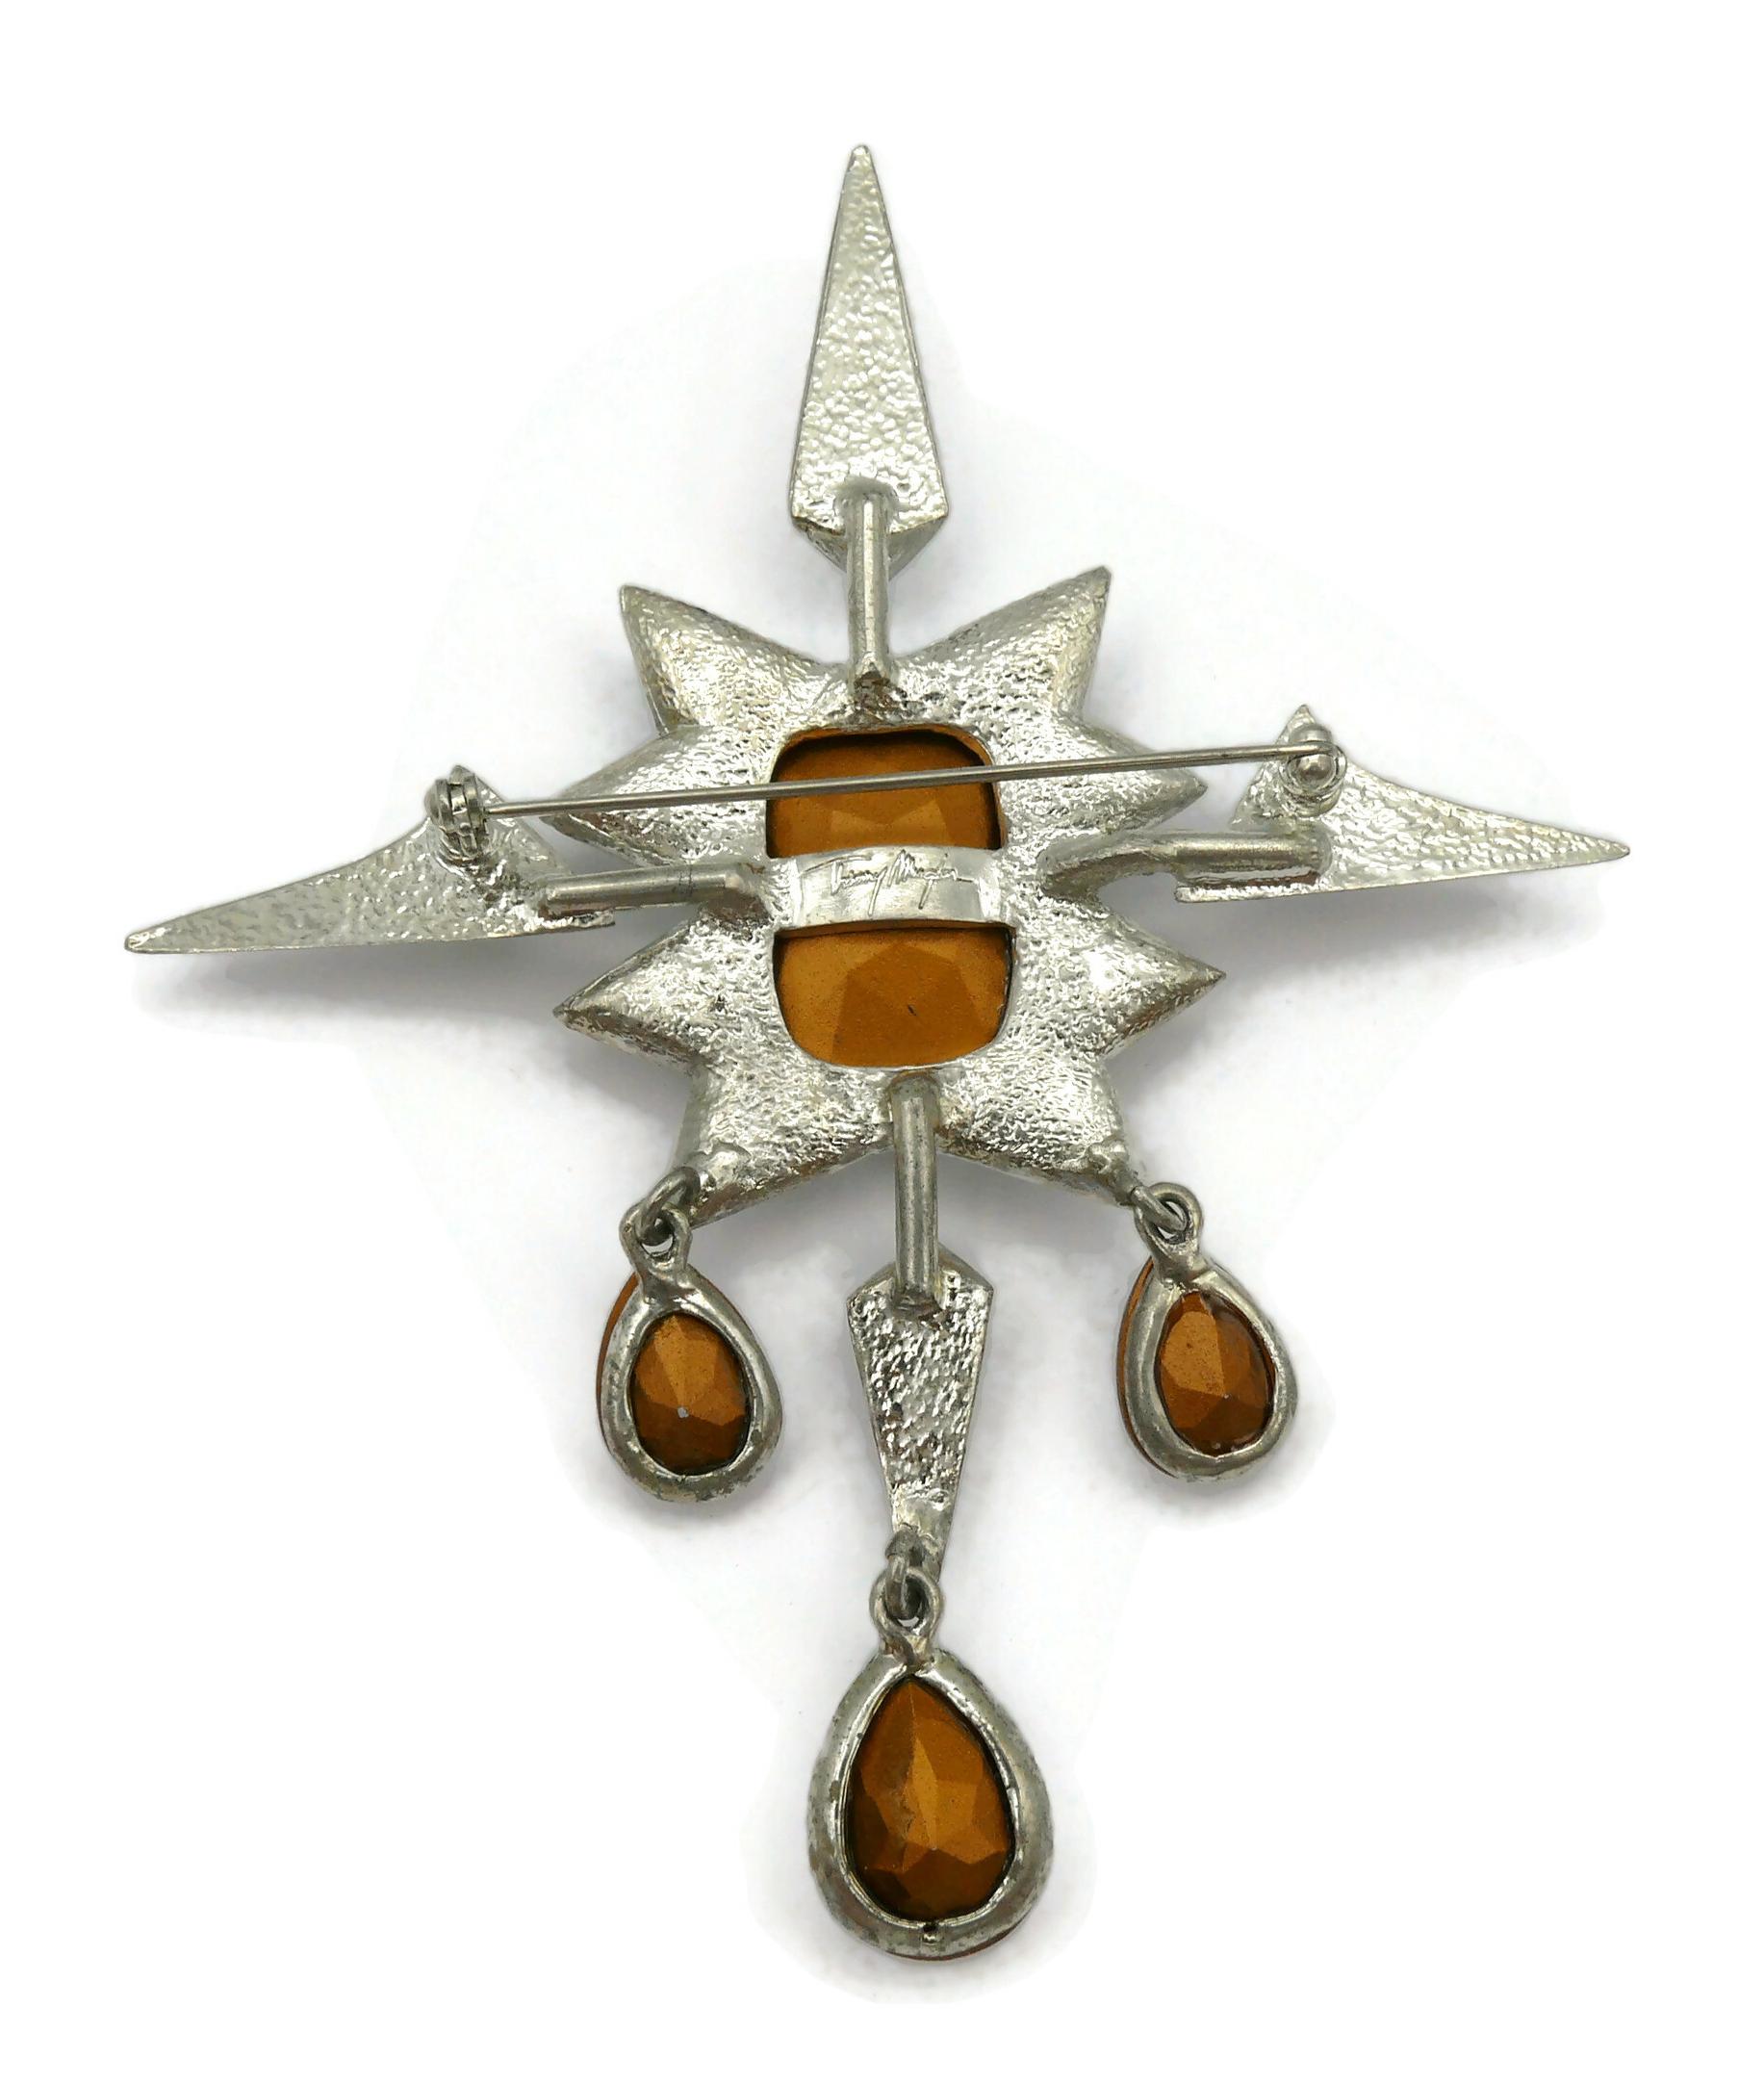 THIERRY MUGLER Vintage Jewelled Star Brooch 2